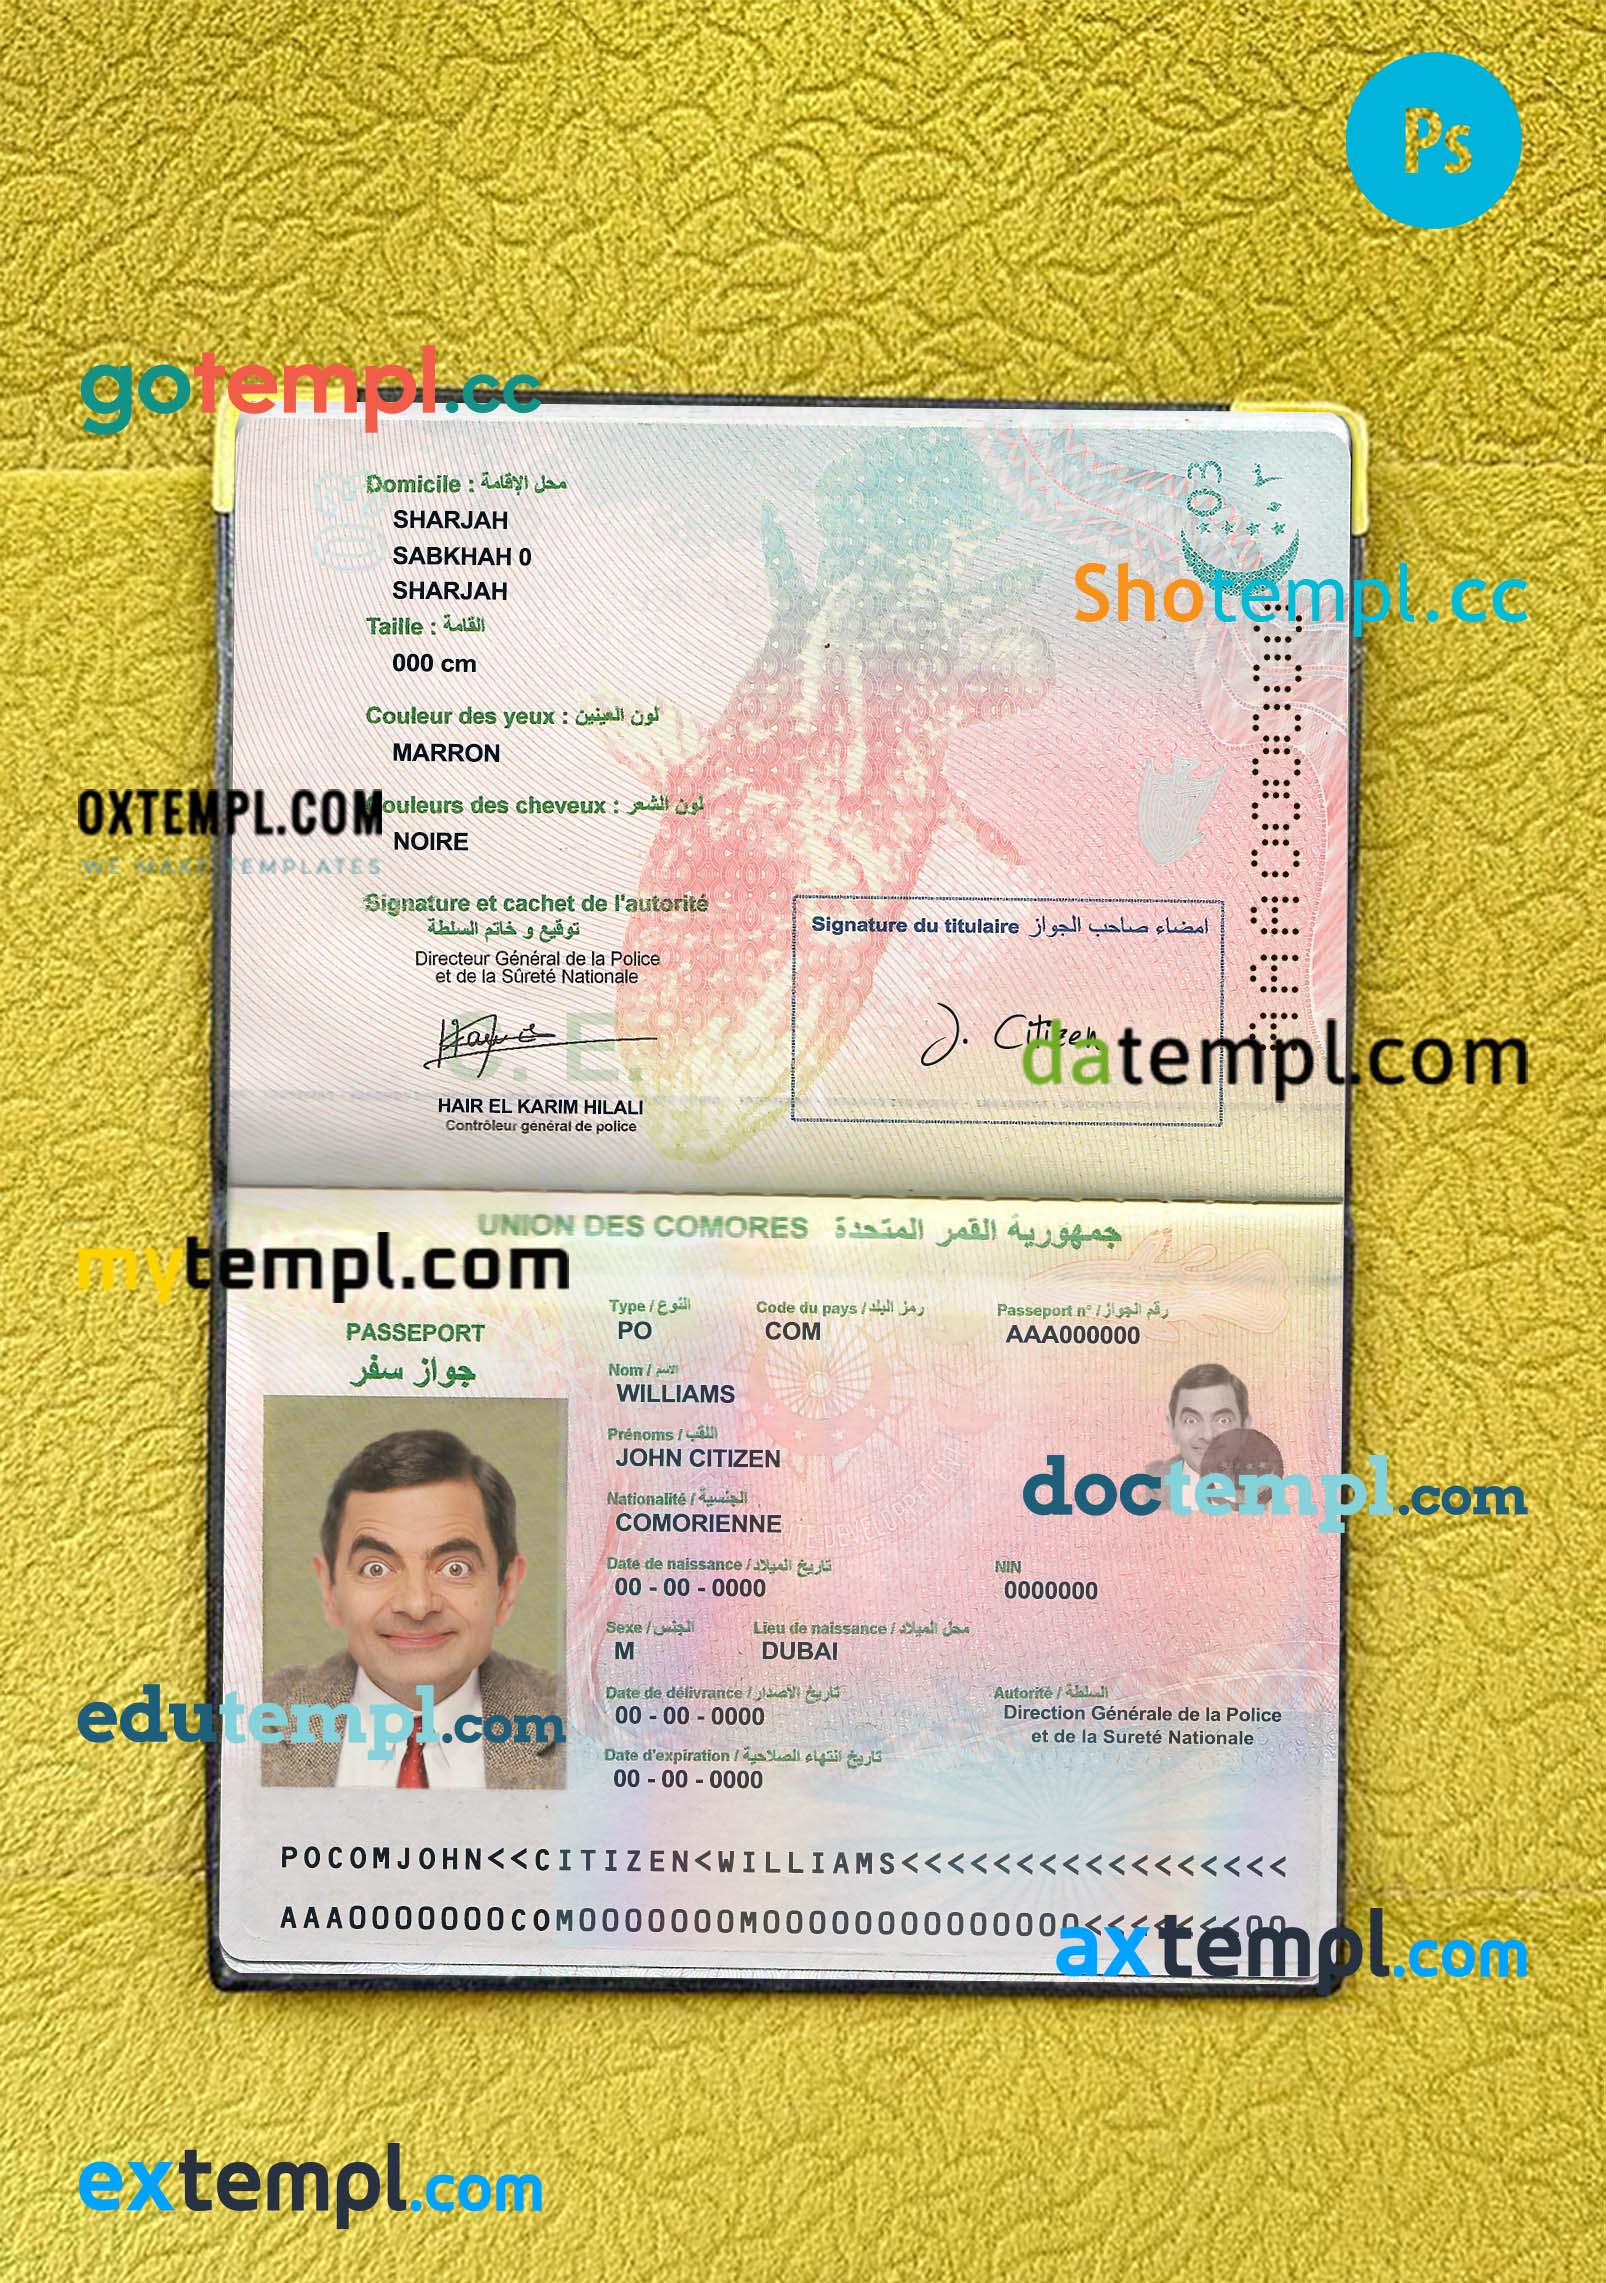 Angola Finibanco Angola S.A. visa card template in PSD format